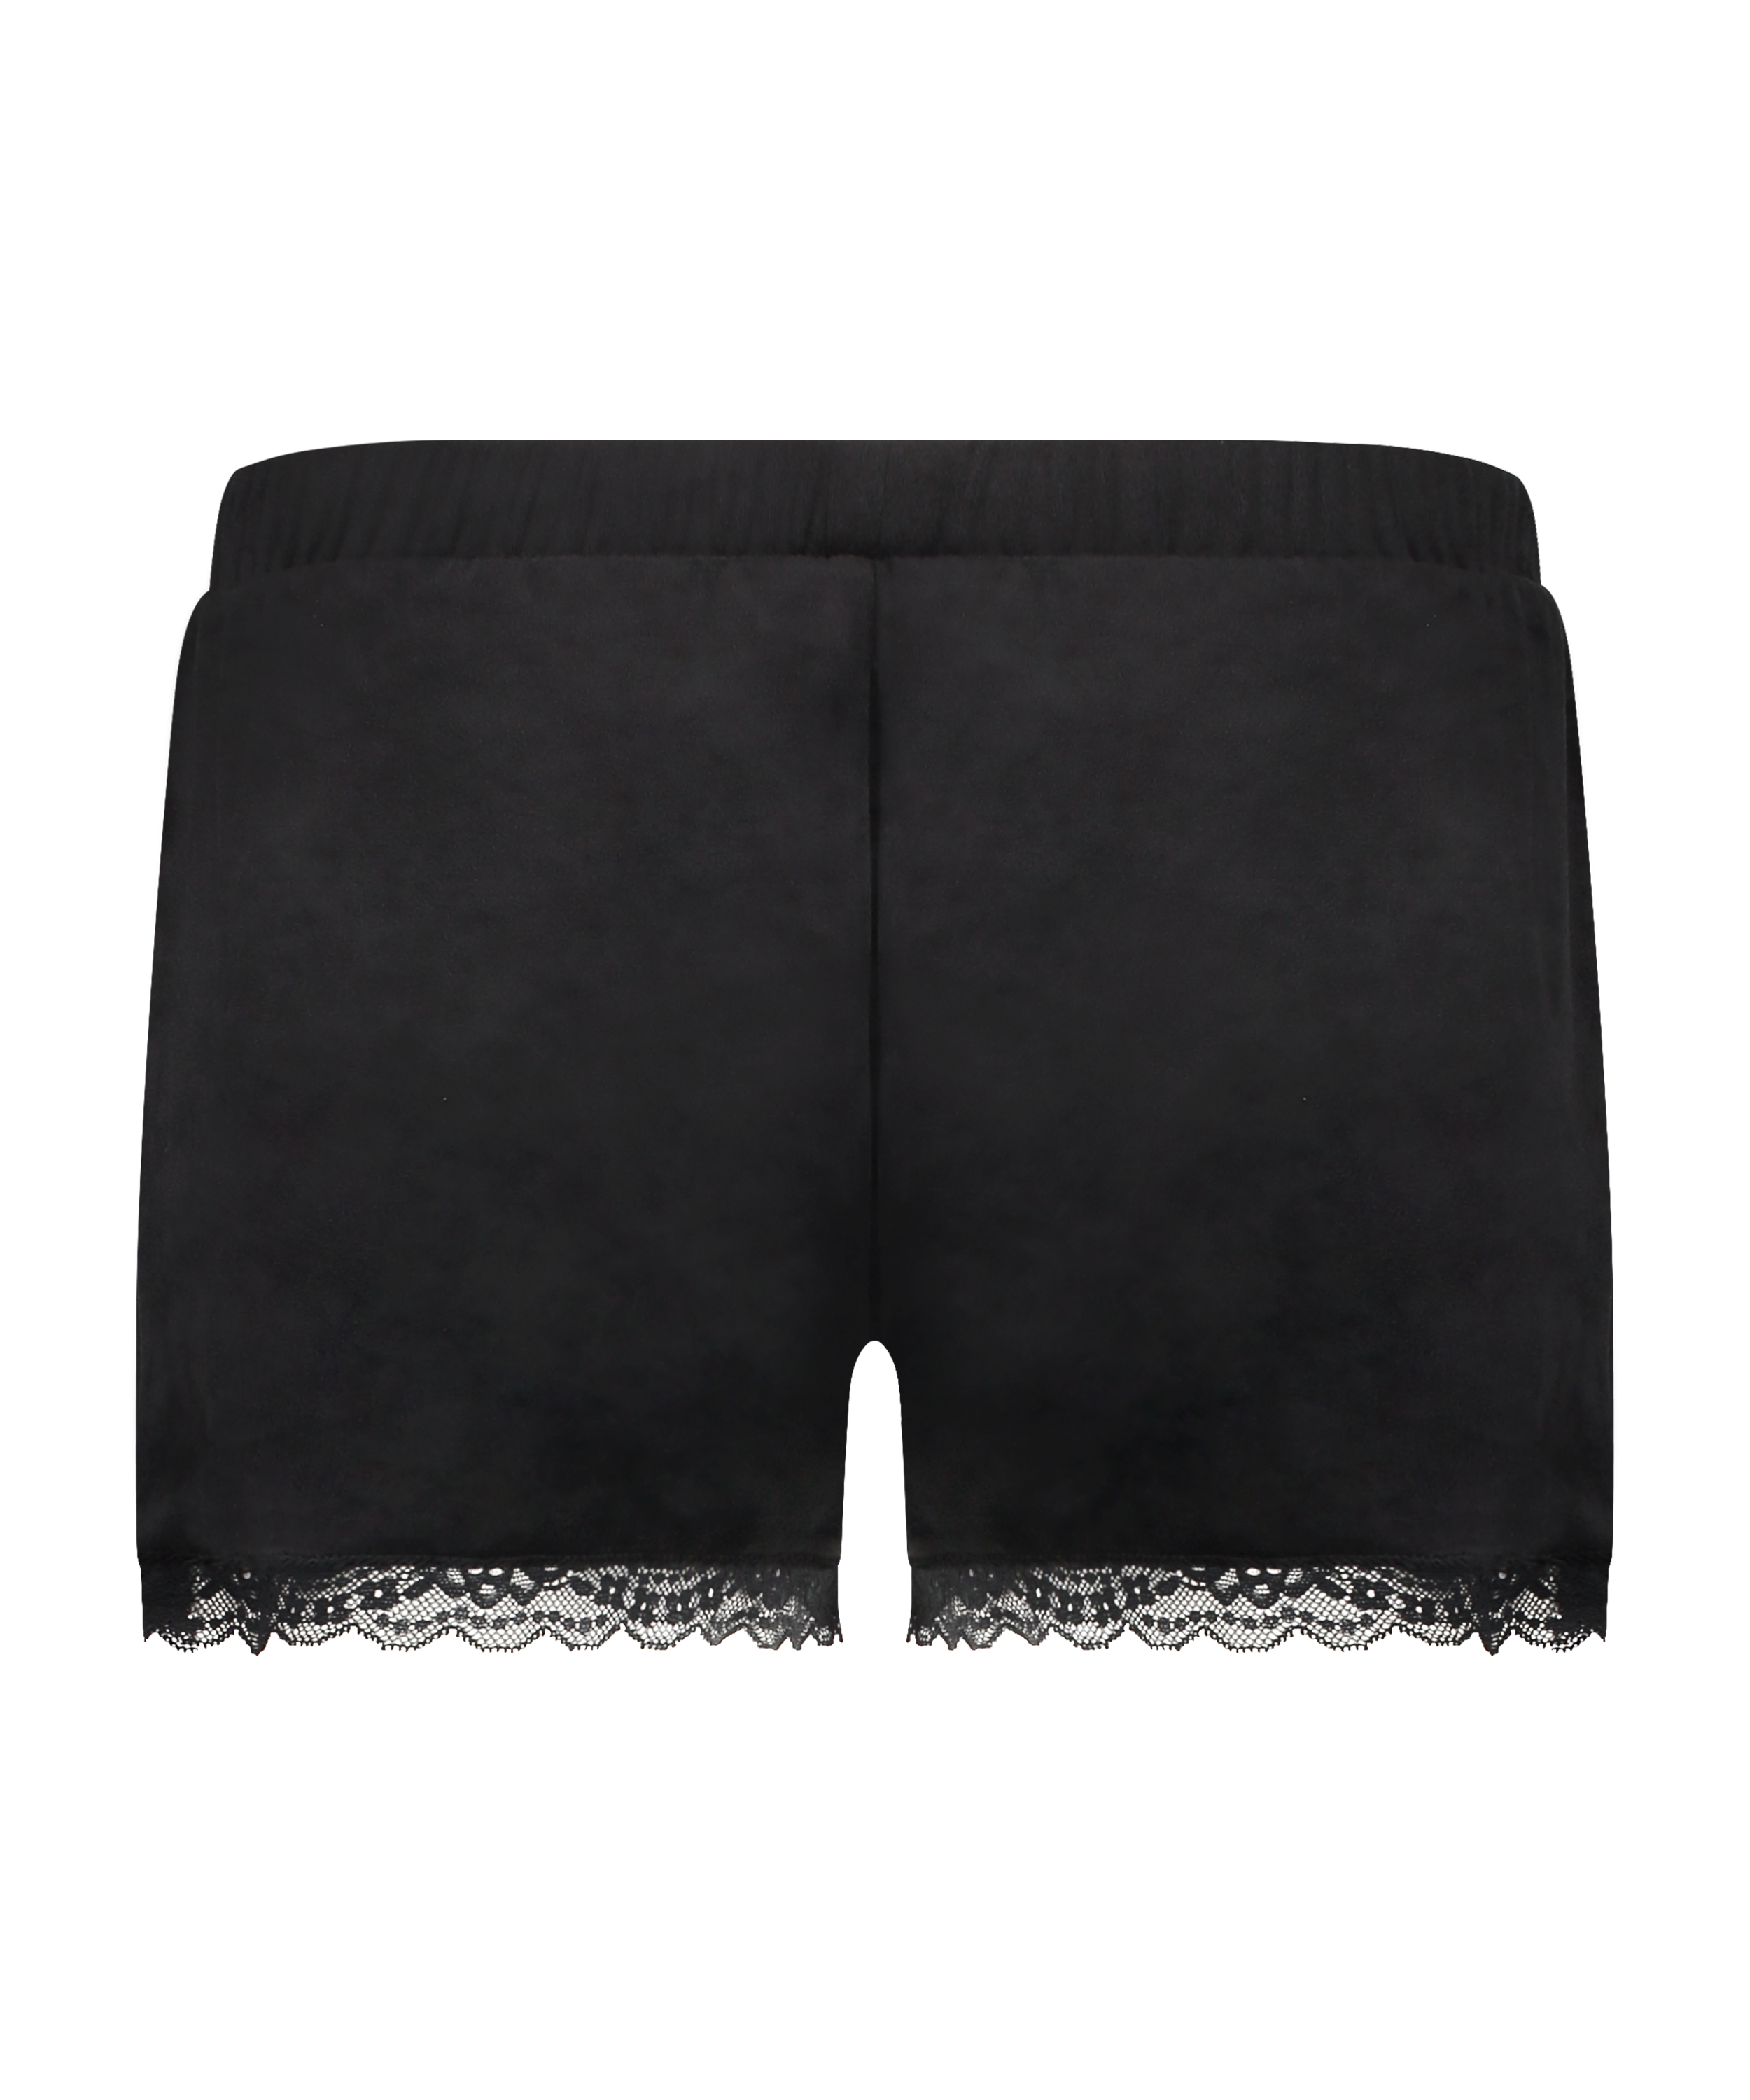 Velours Lace shorts, sort, main